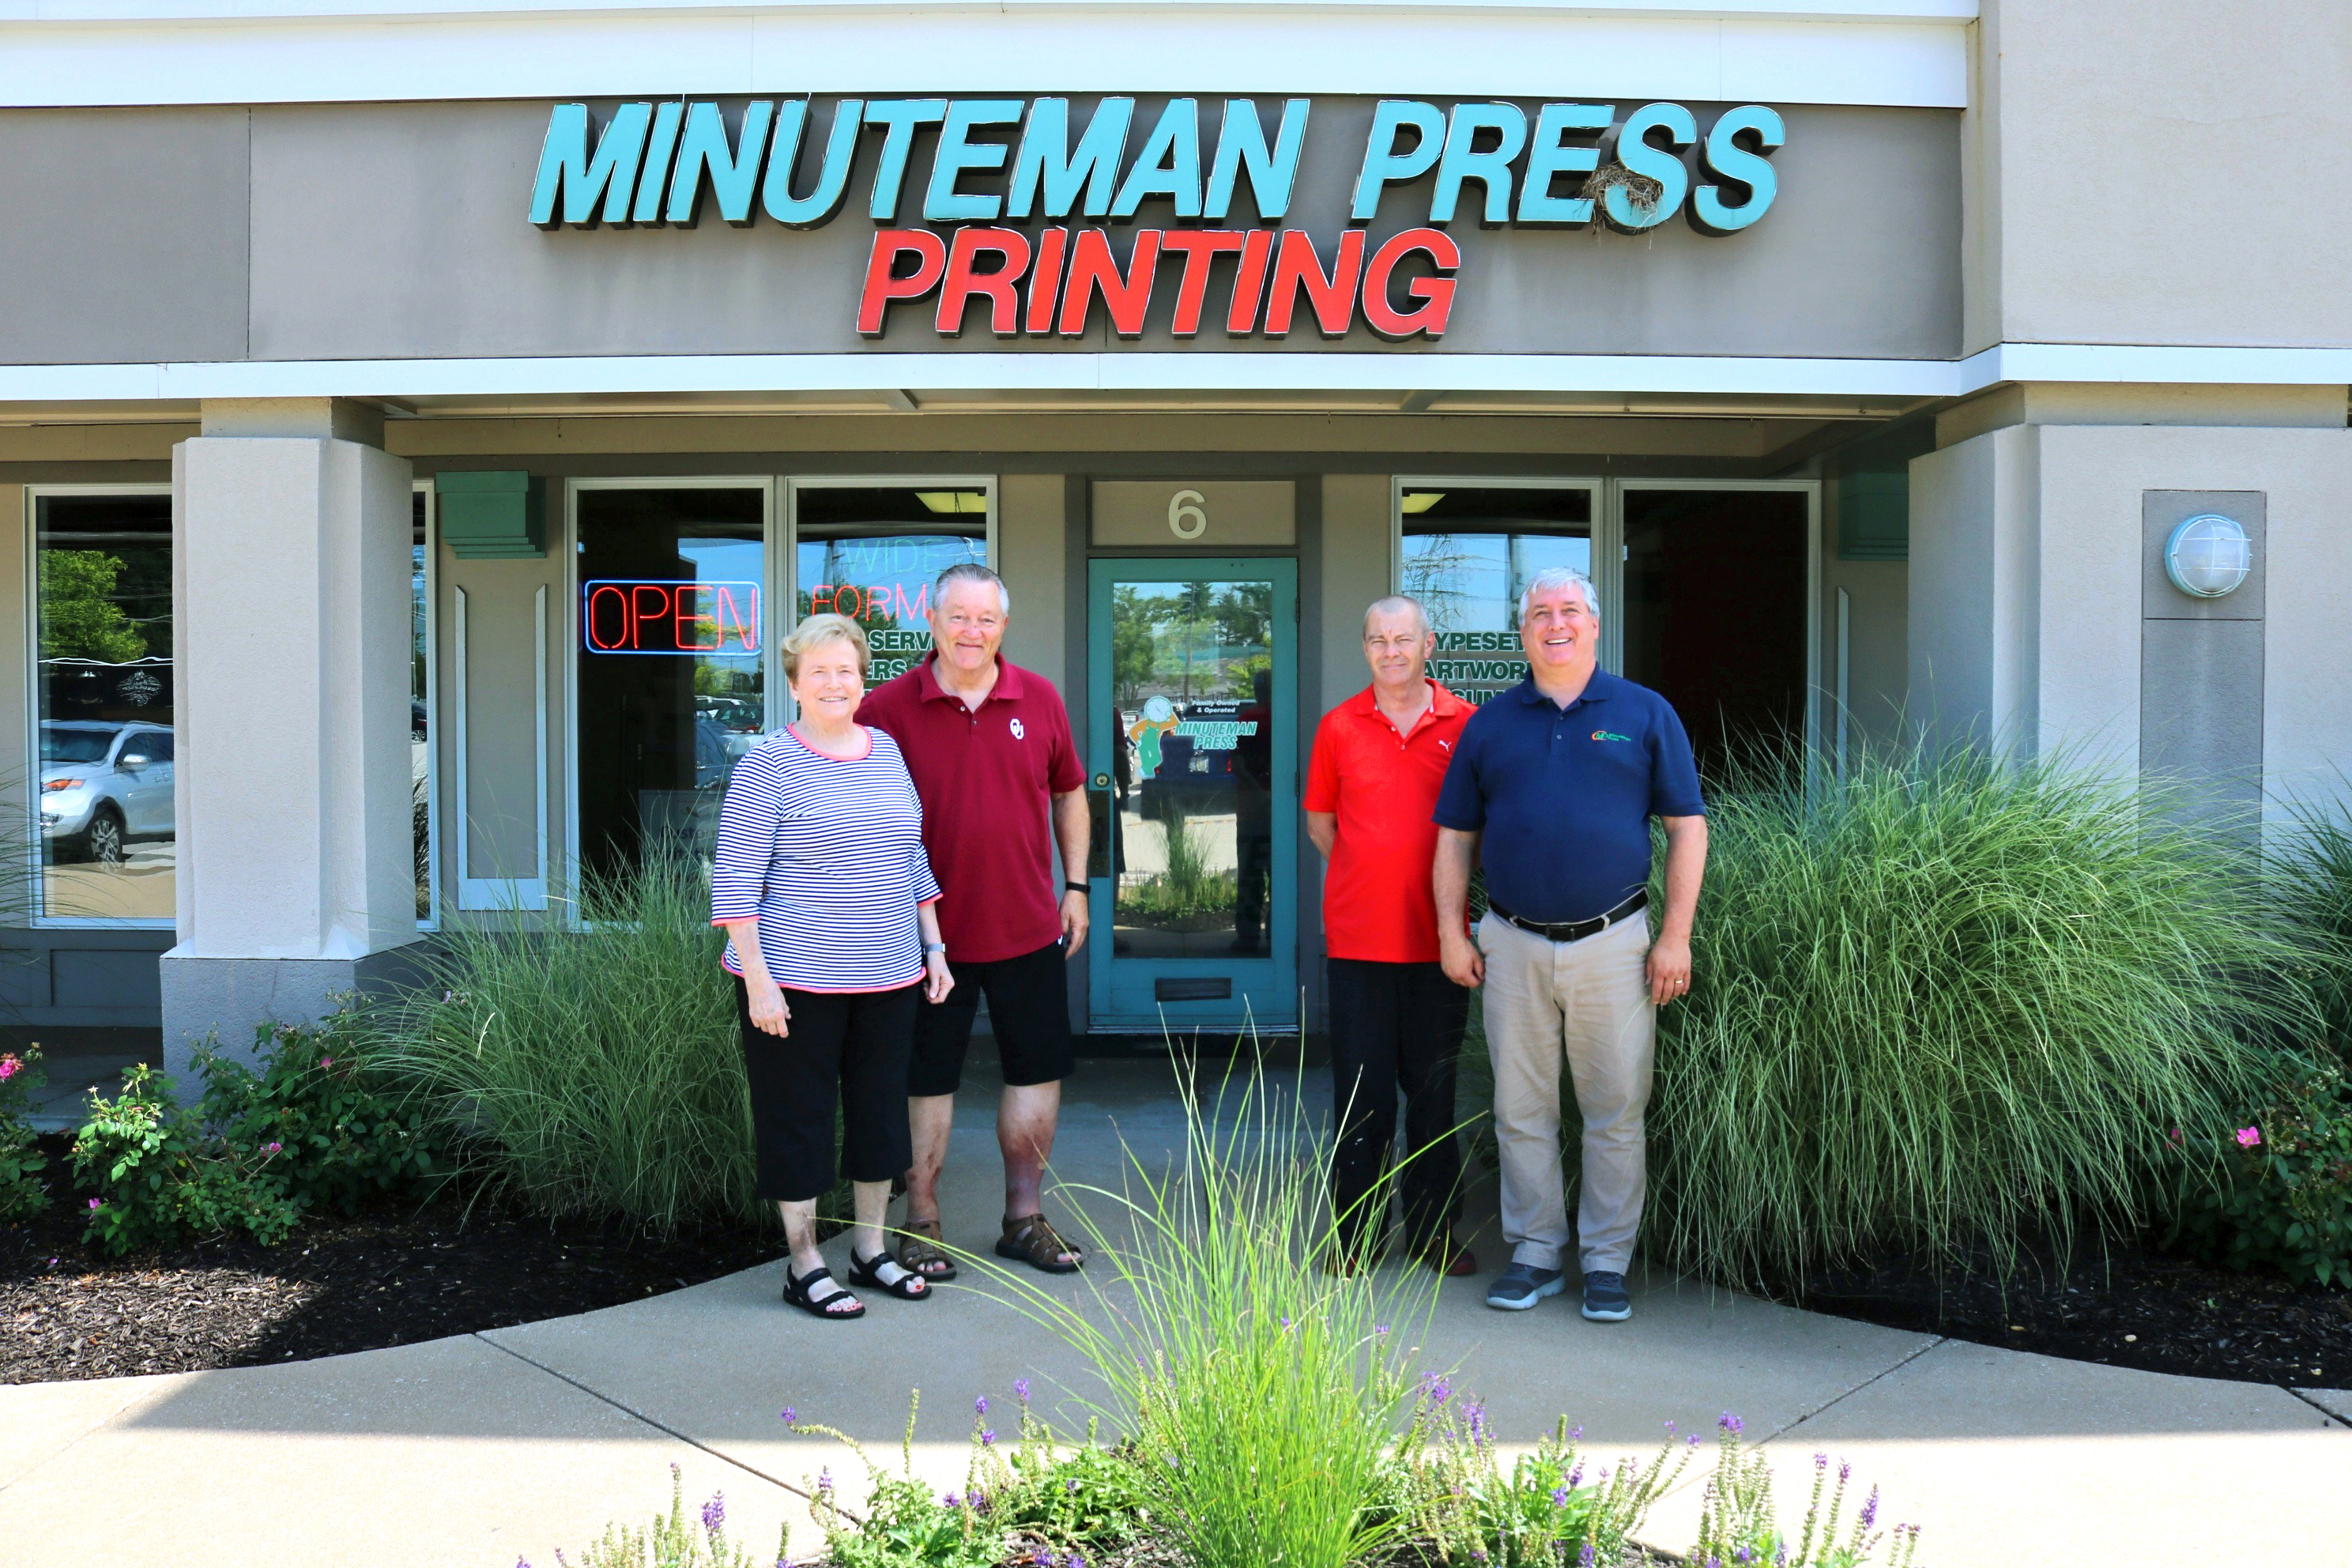 Minuteman Press printing franchise - Chesterfield, Missouri https://minutemanpressfranchise.com